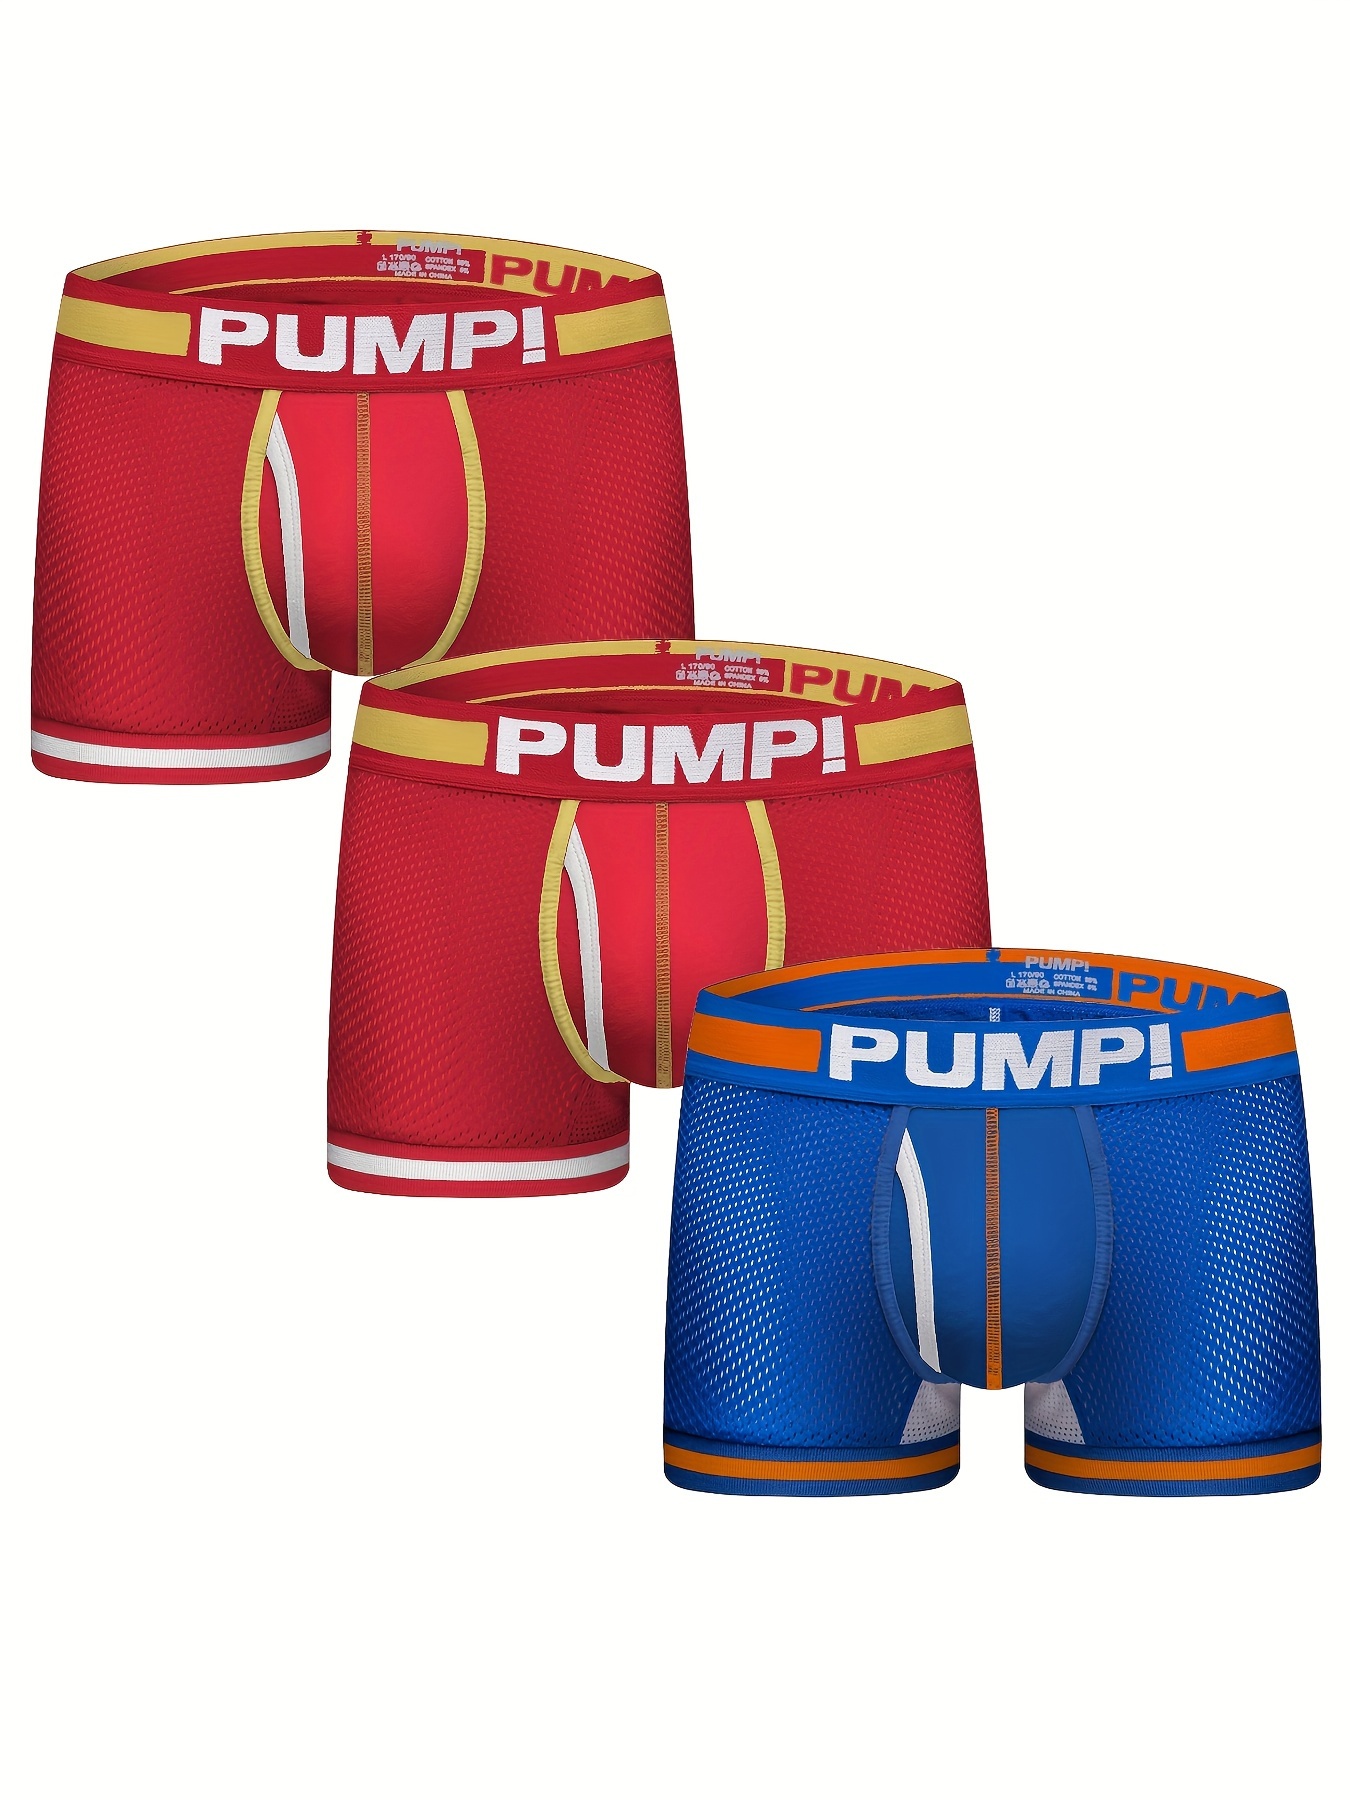 Men's Pump! Boxers briefs from $25